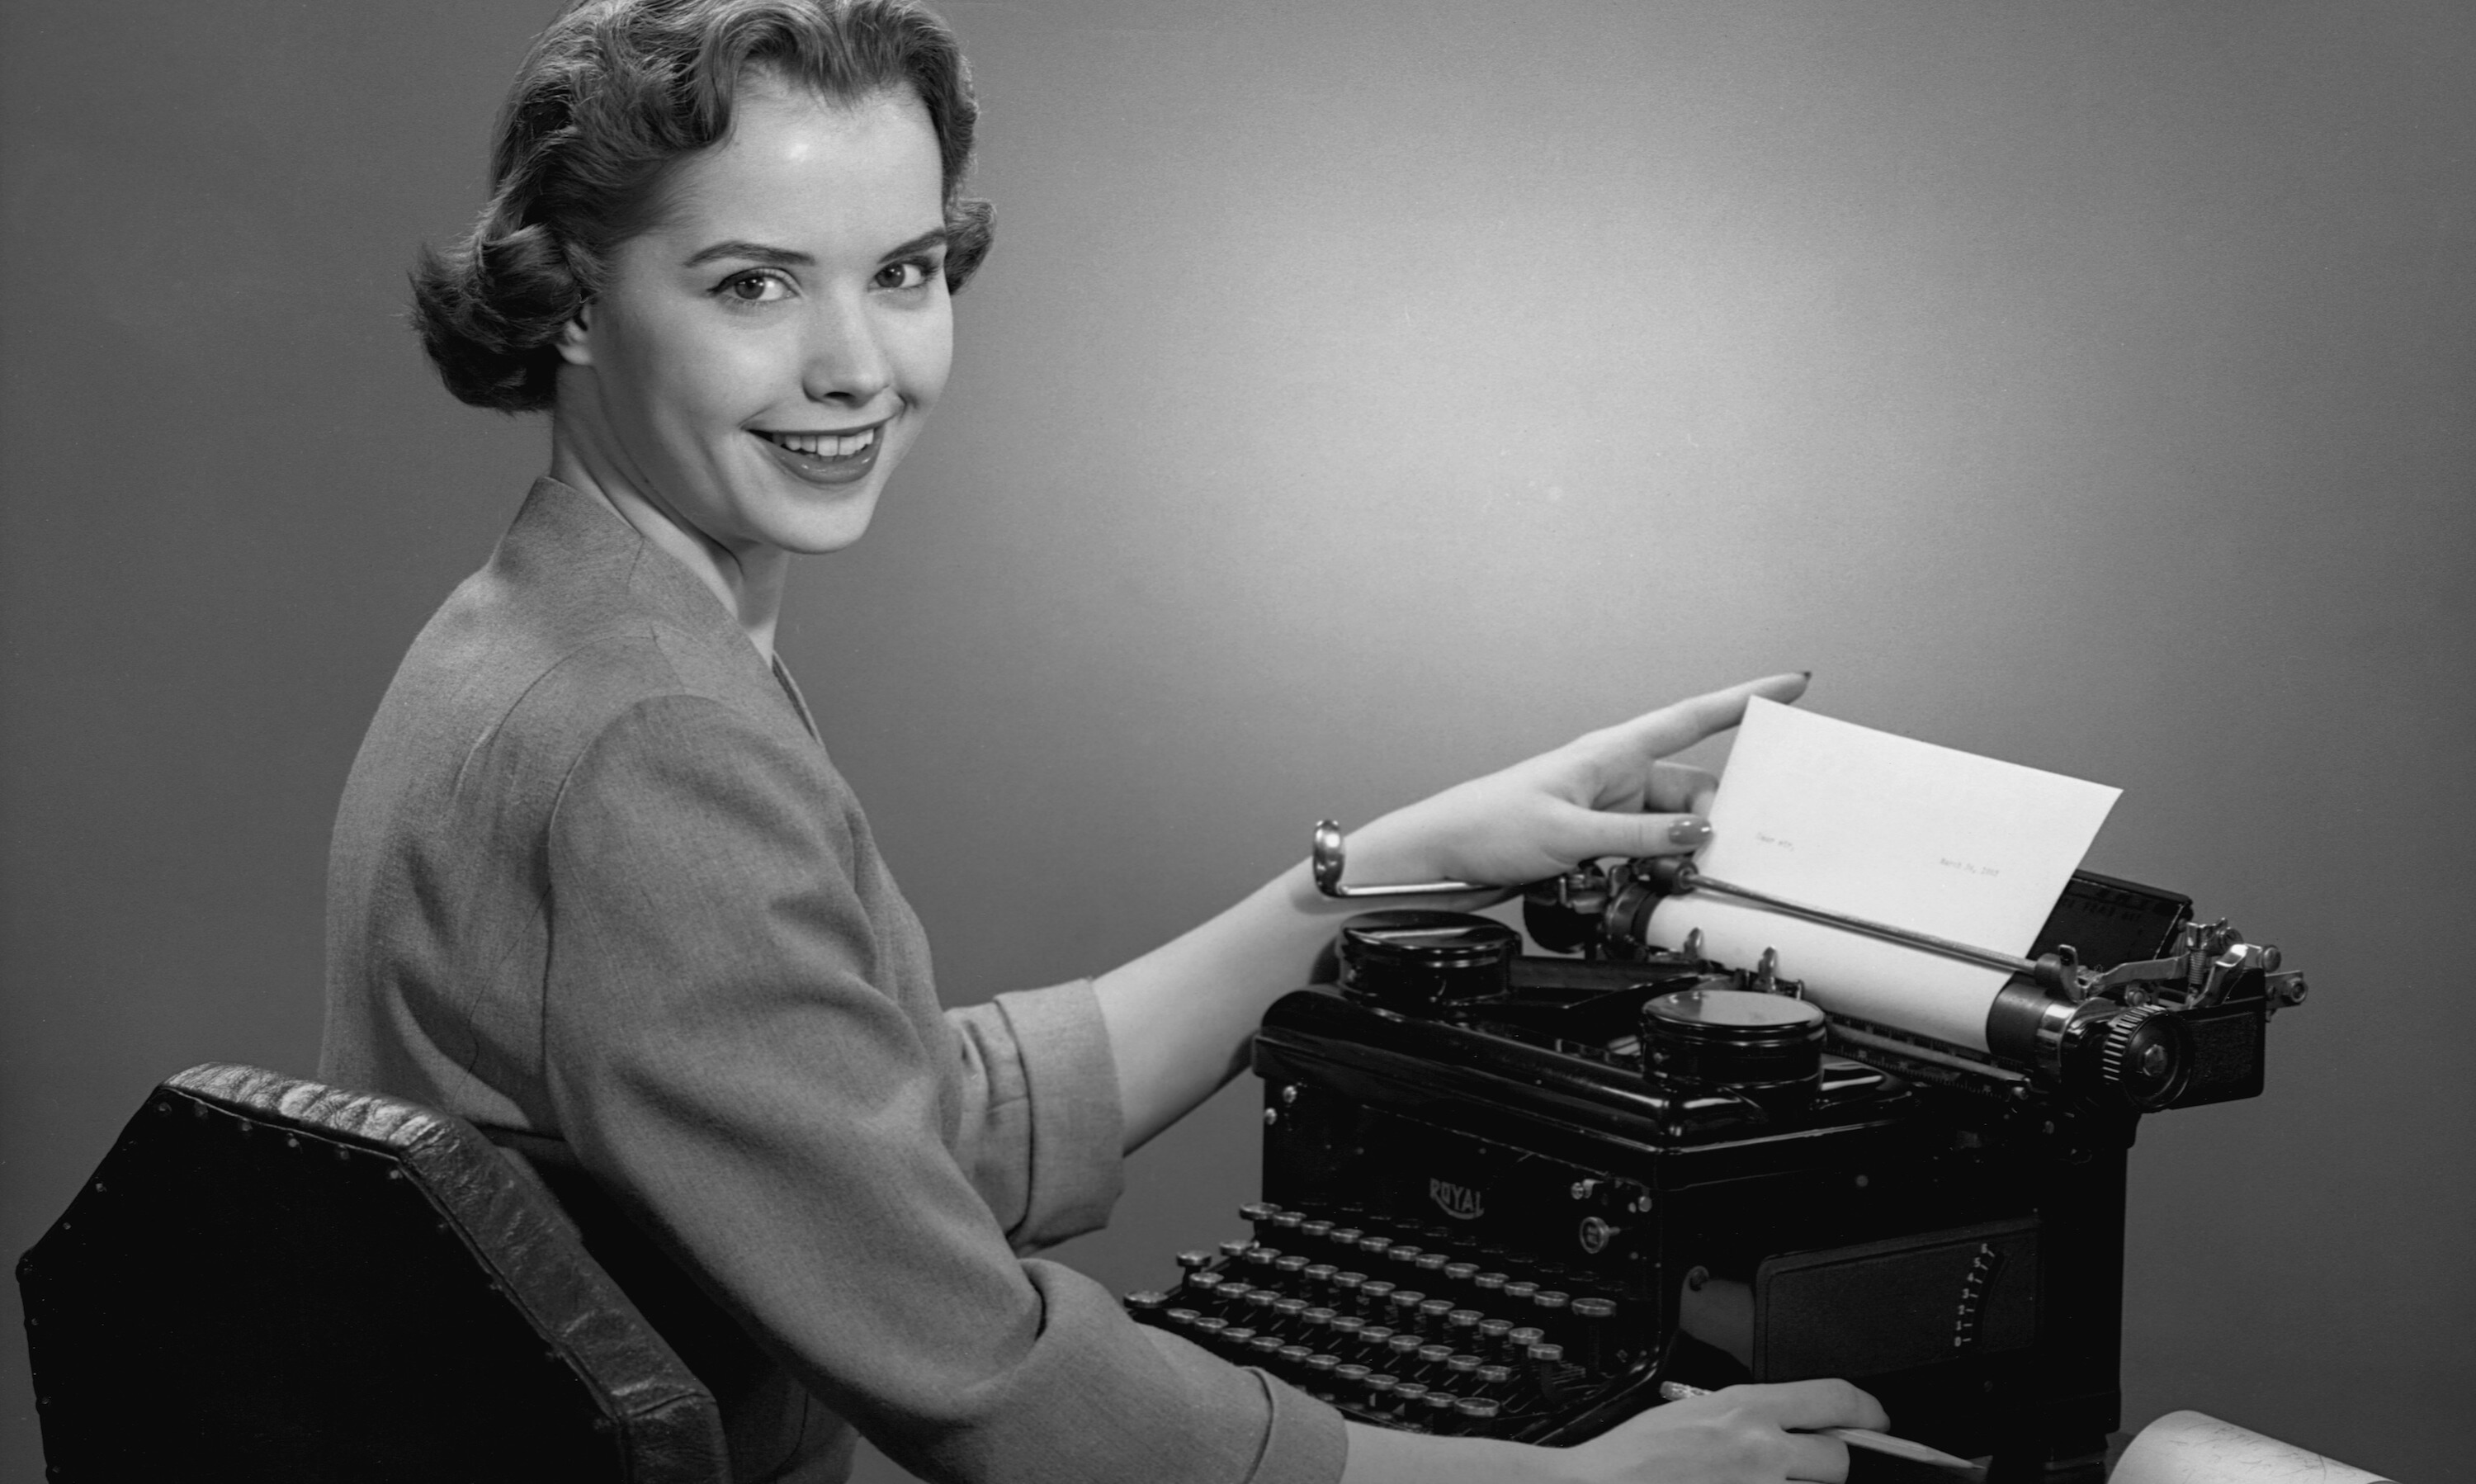 Office worker working on a vintage typewriter